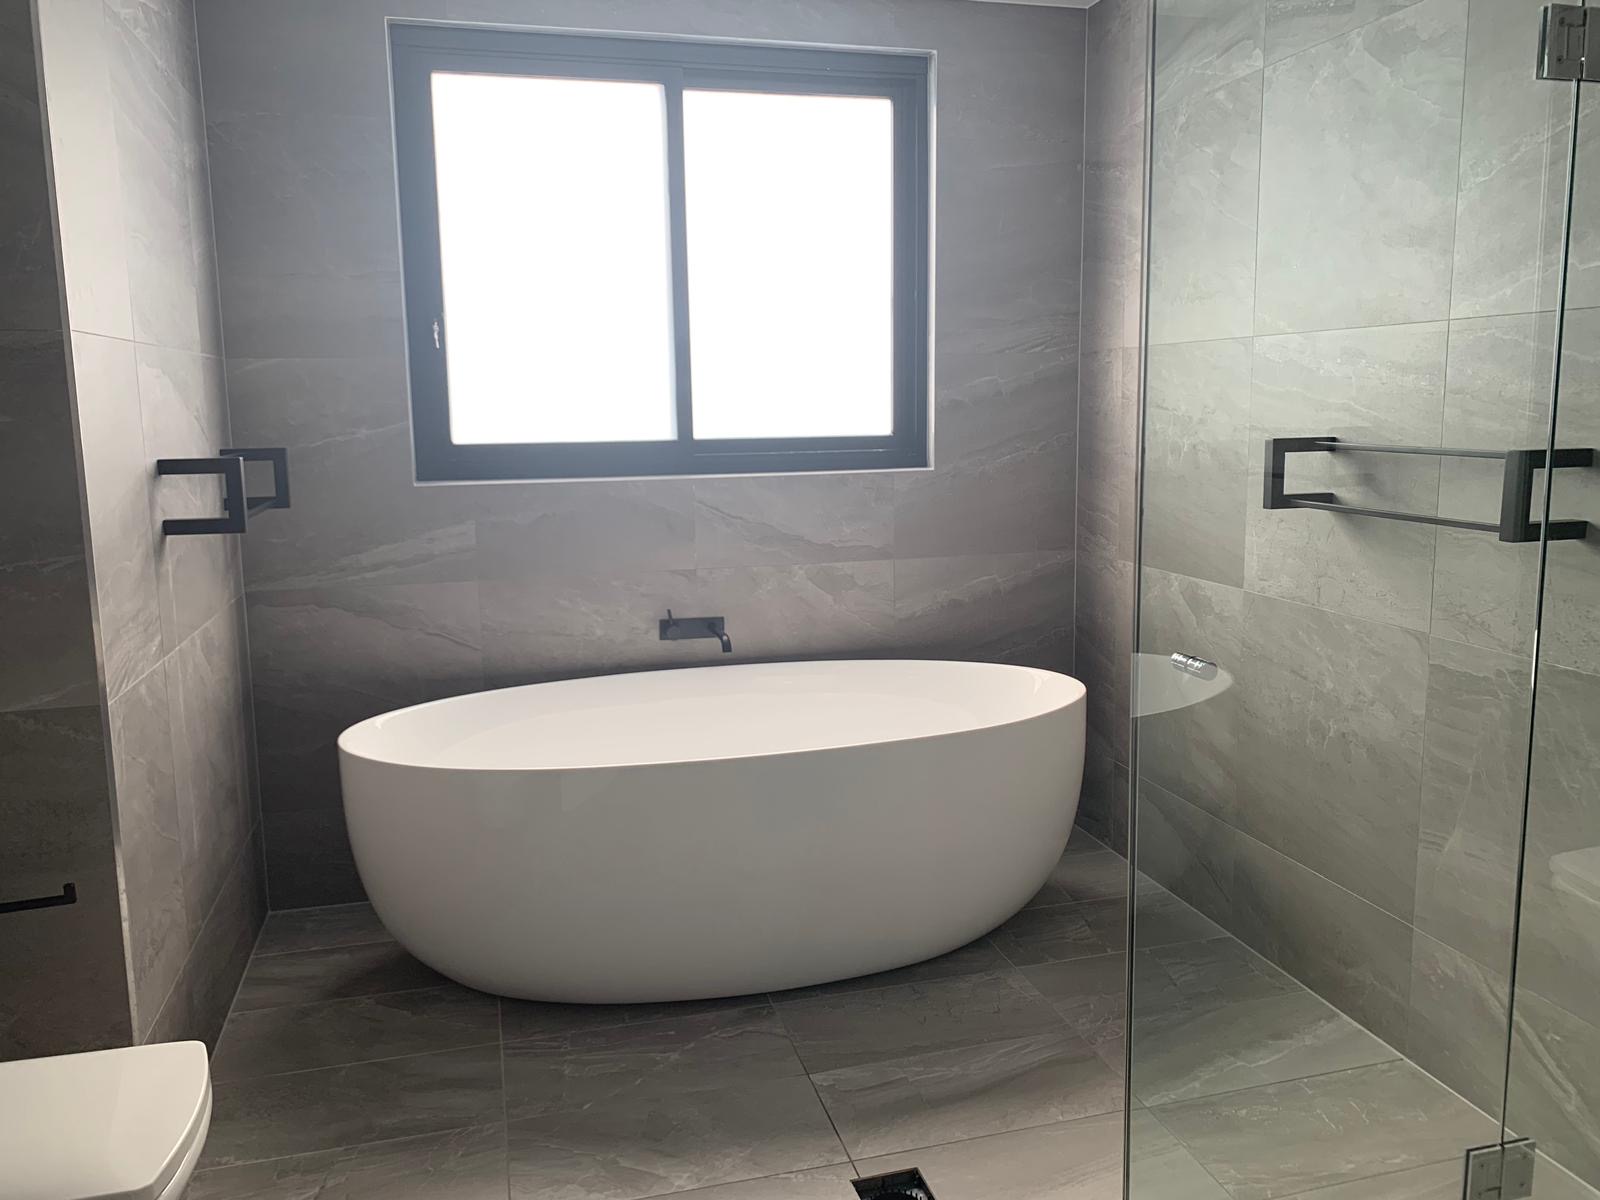 Bath tub area in bathroom with Warmtech Inscreed heating system